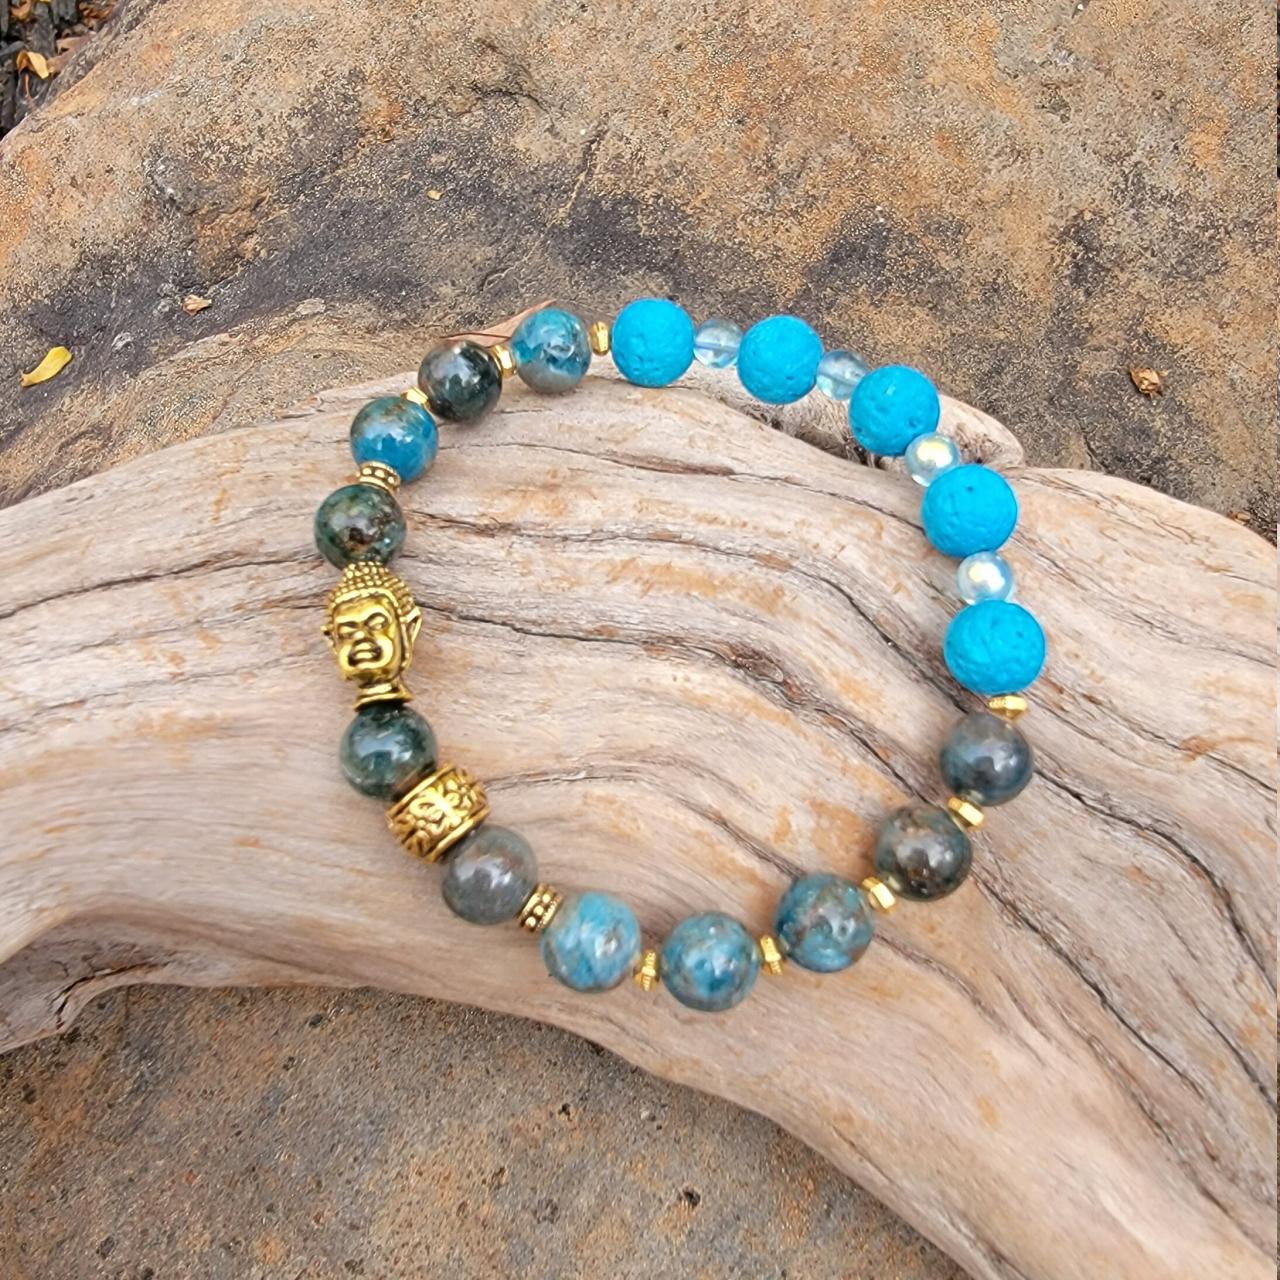 Apatite Natural Healing Gemstone Bracelet With Buddha Head Bead, Lava Stones And Czech Glass Beads